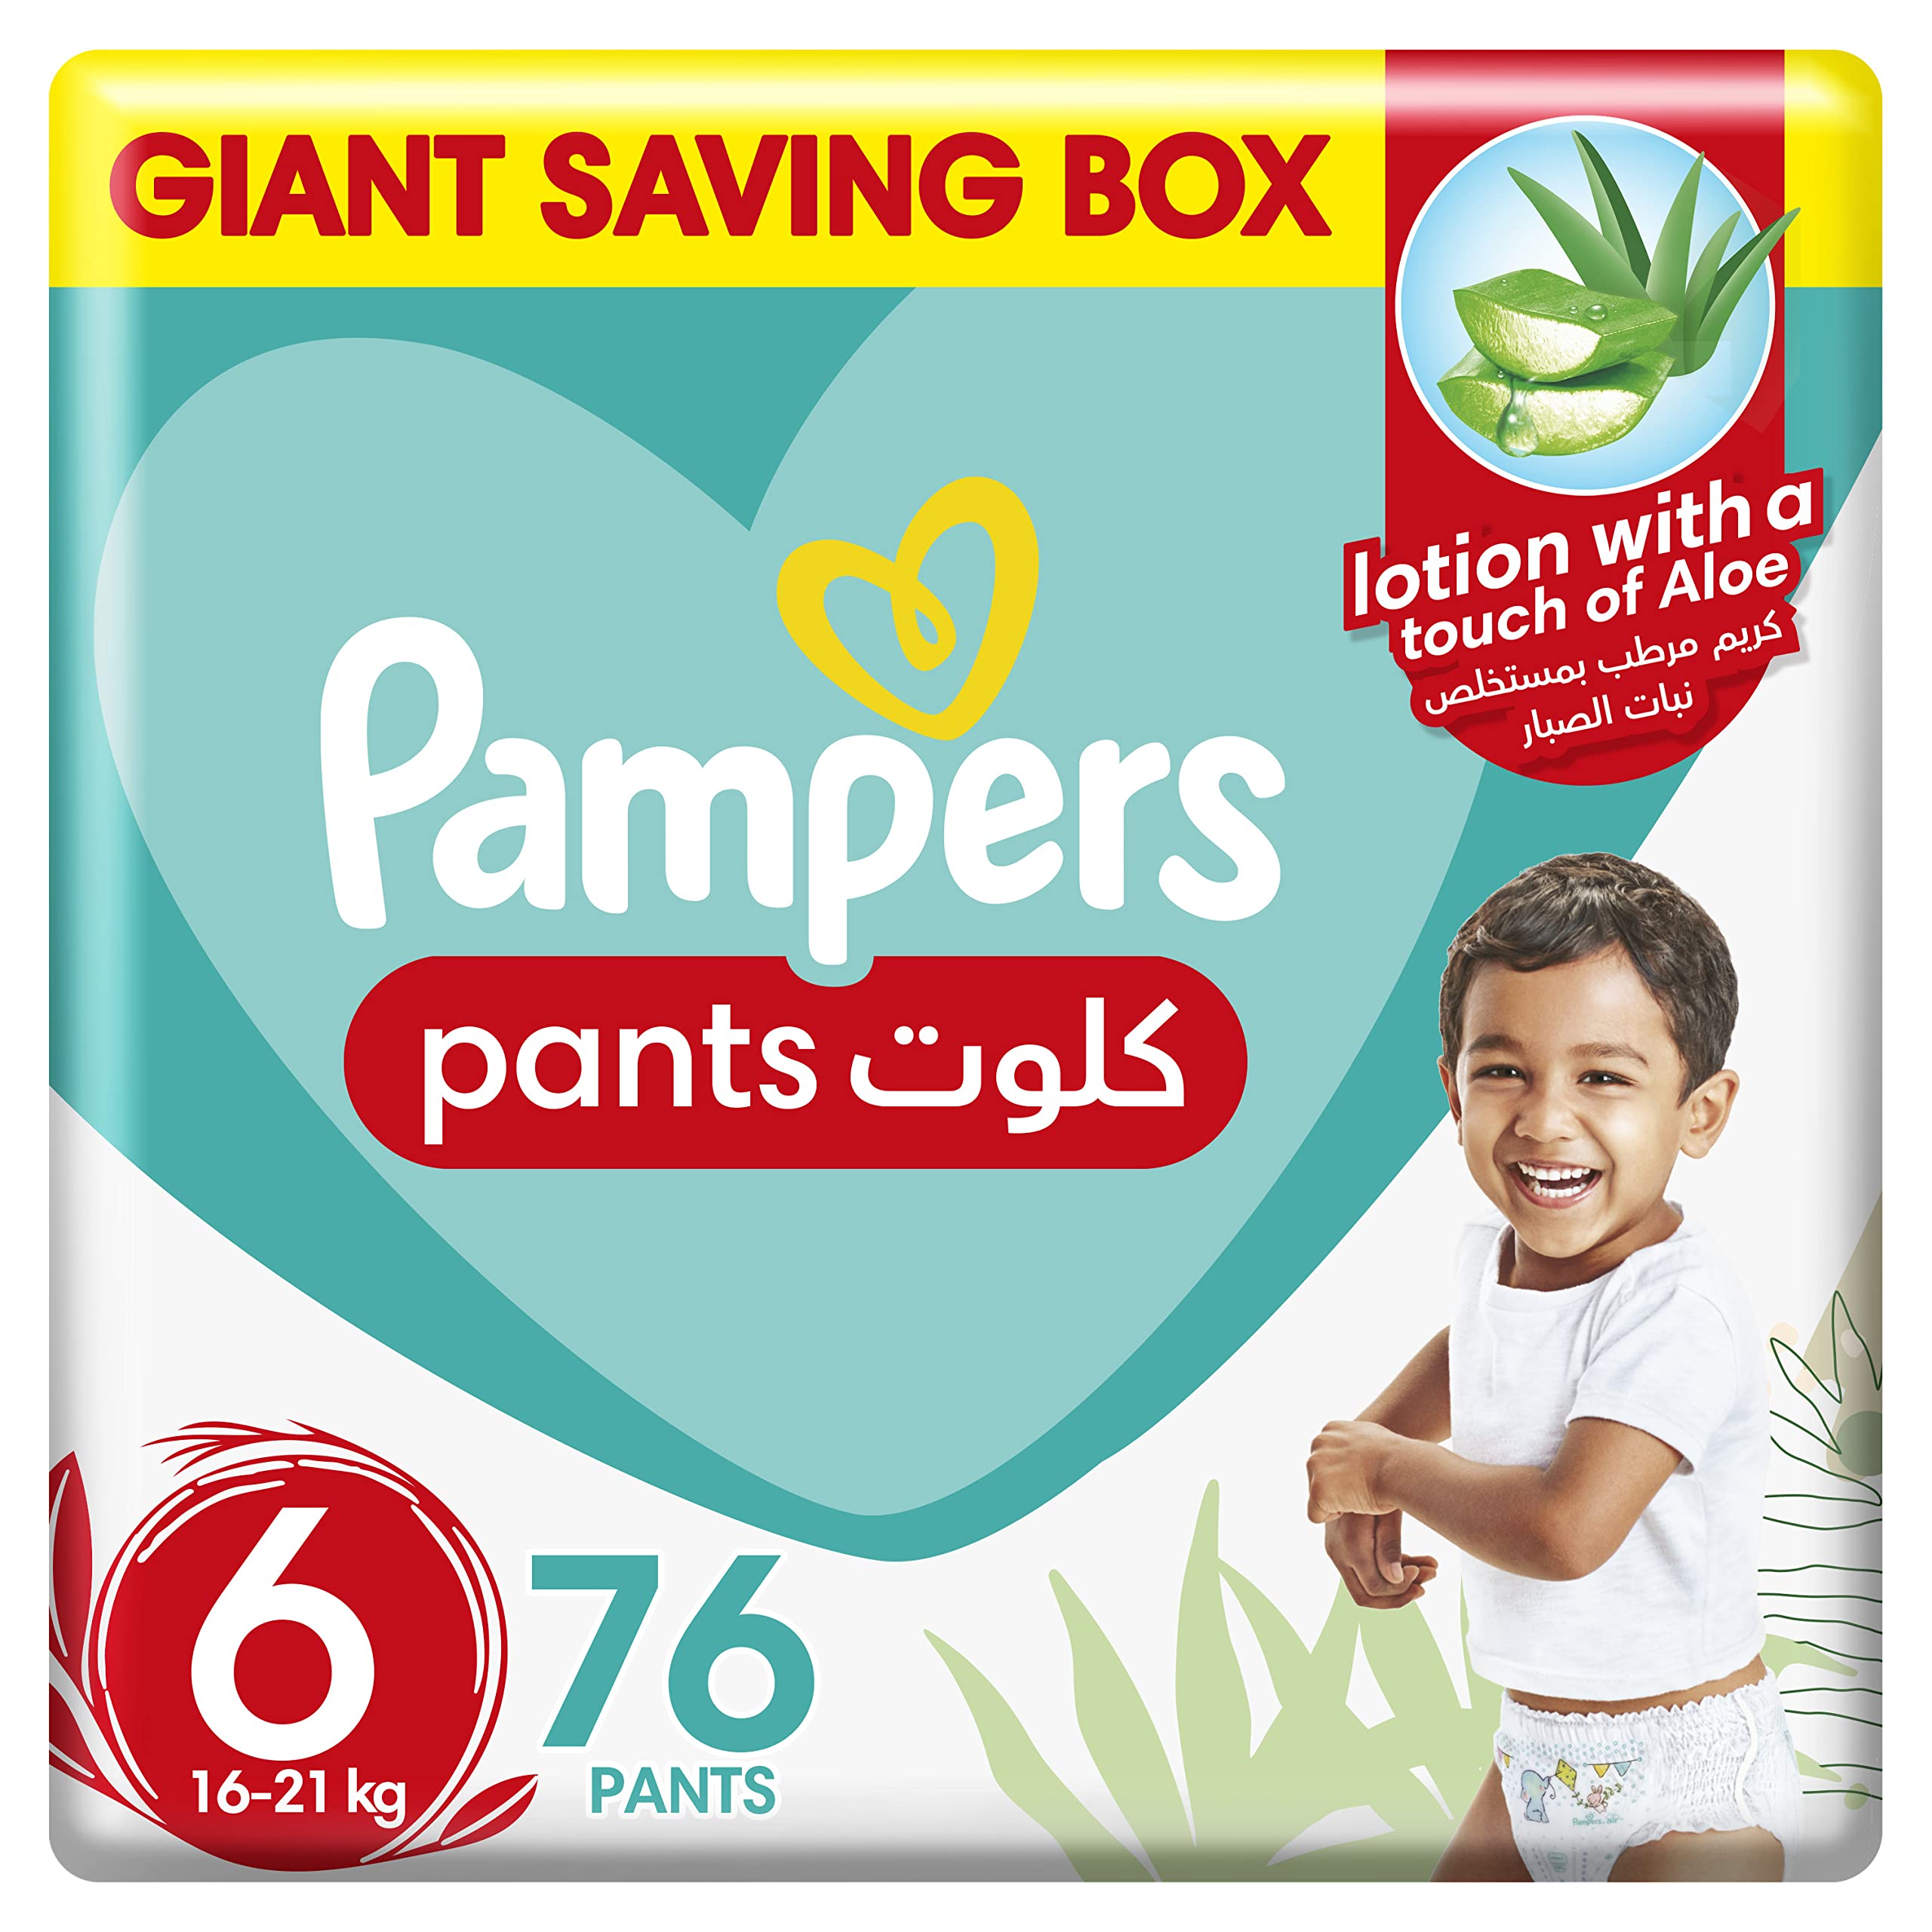 Pampers Baby-Dry Pants Diapers Size 6, 16+kg With Stretchy Sides for Better Fit 76pcs حفاضات بيبي دراي مقاس 6 من بامبرز، +16 كجم مع جوانب قابلة للتمدد لملاءمة افضل، 76 قطعة